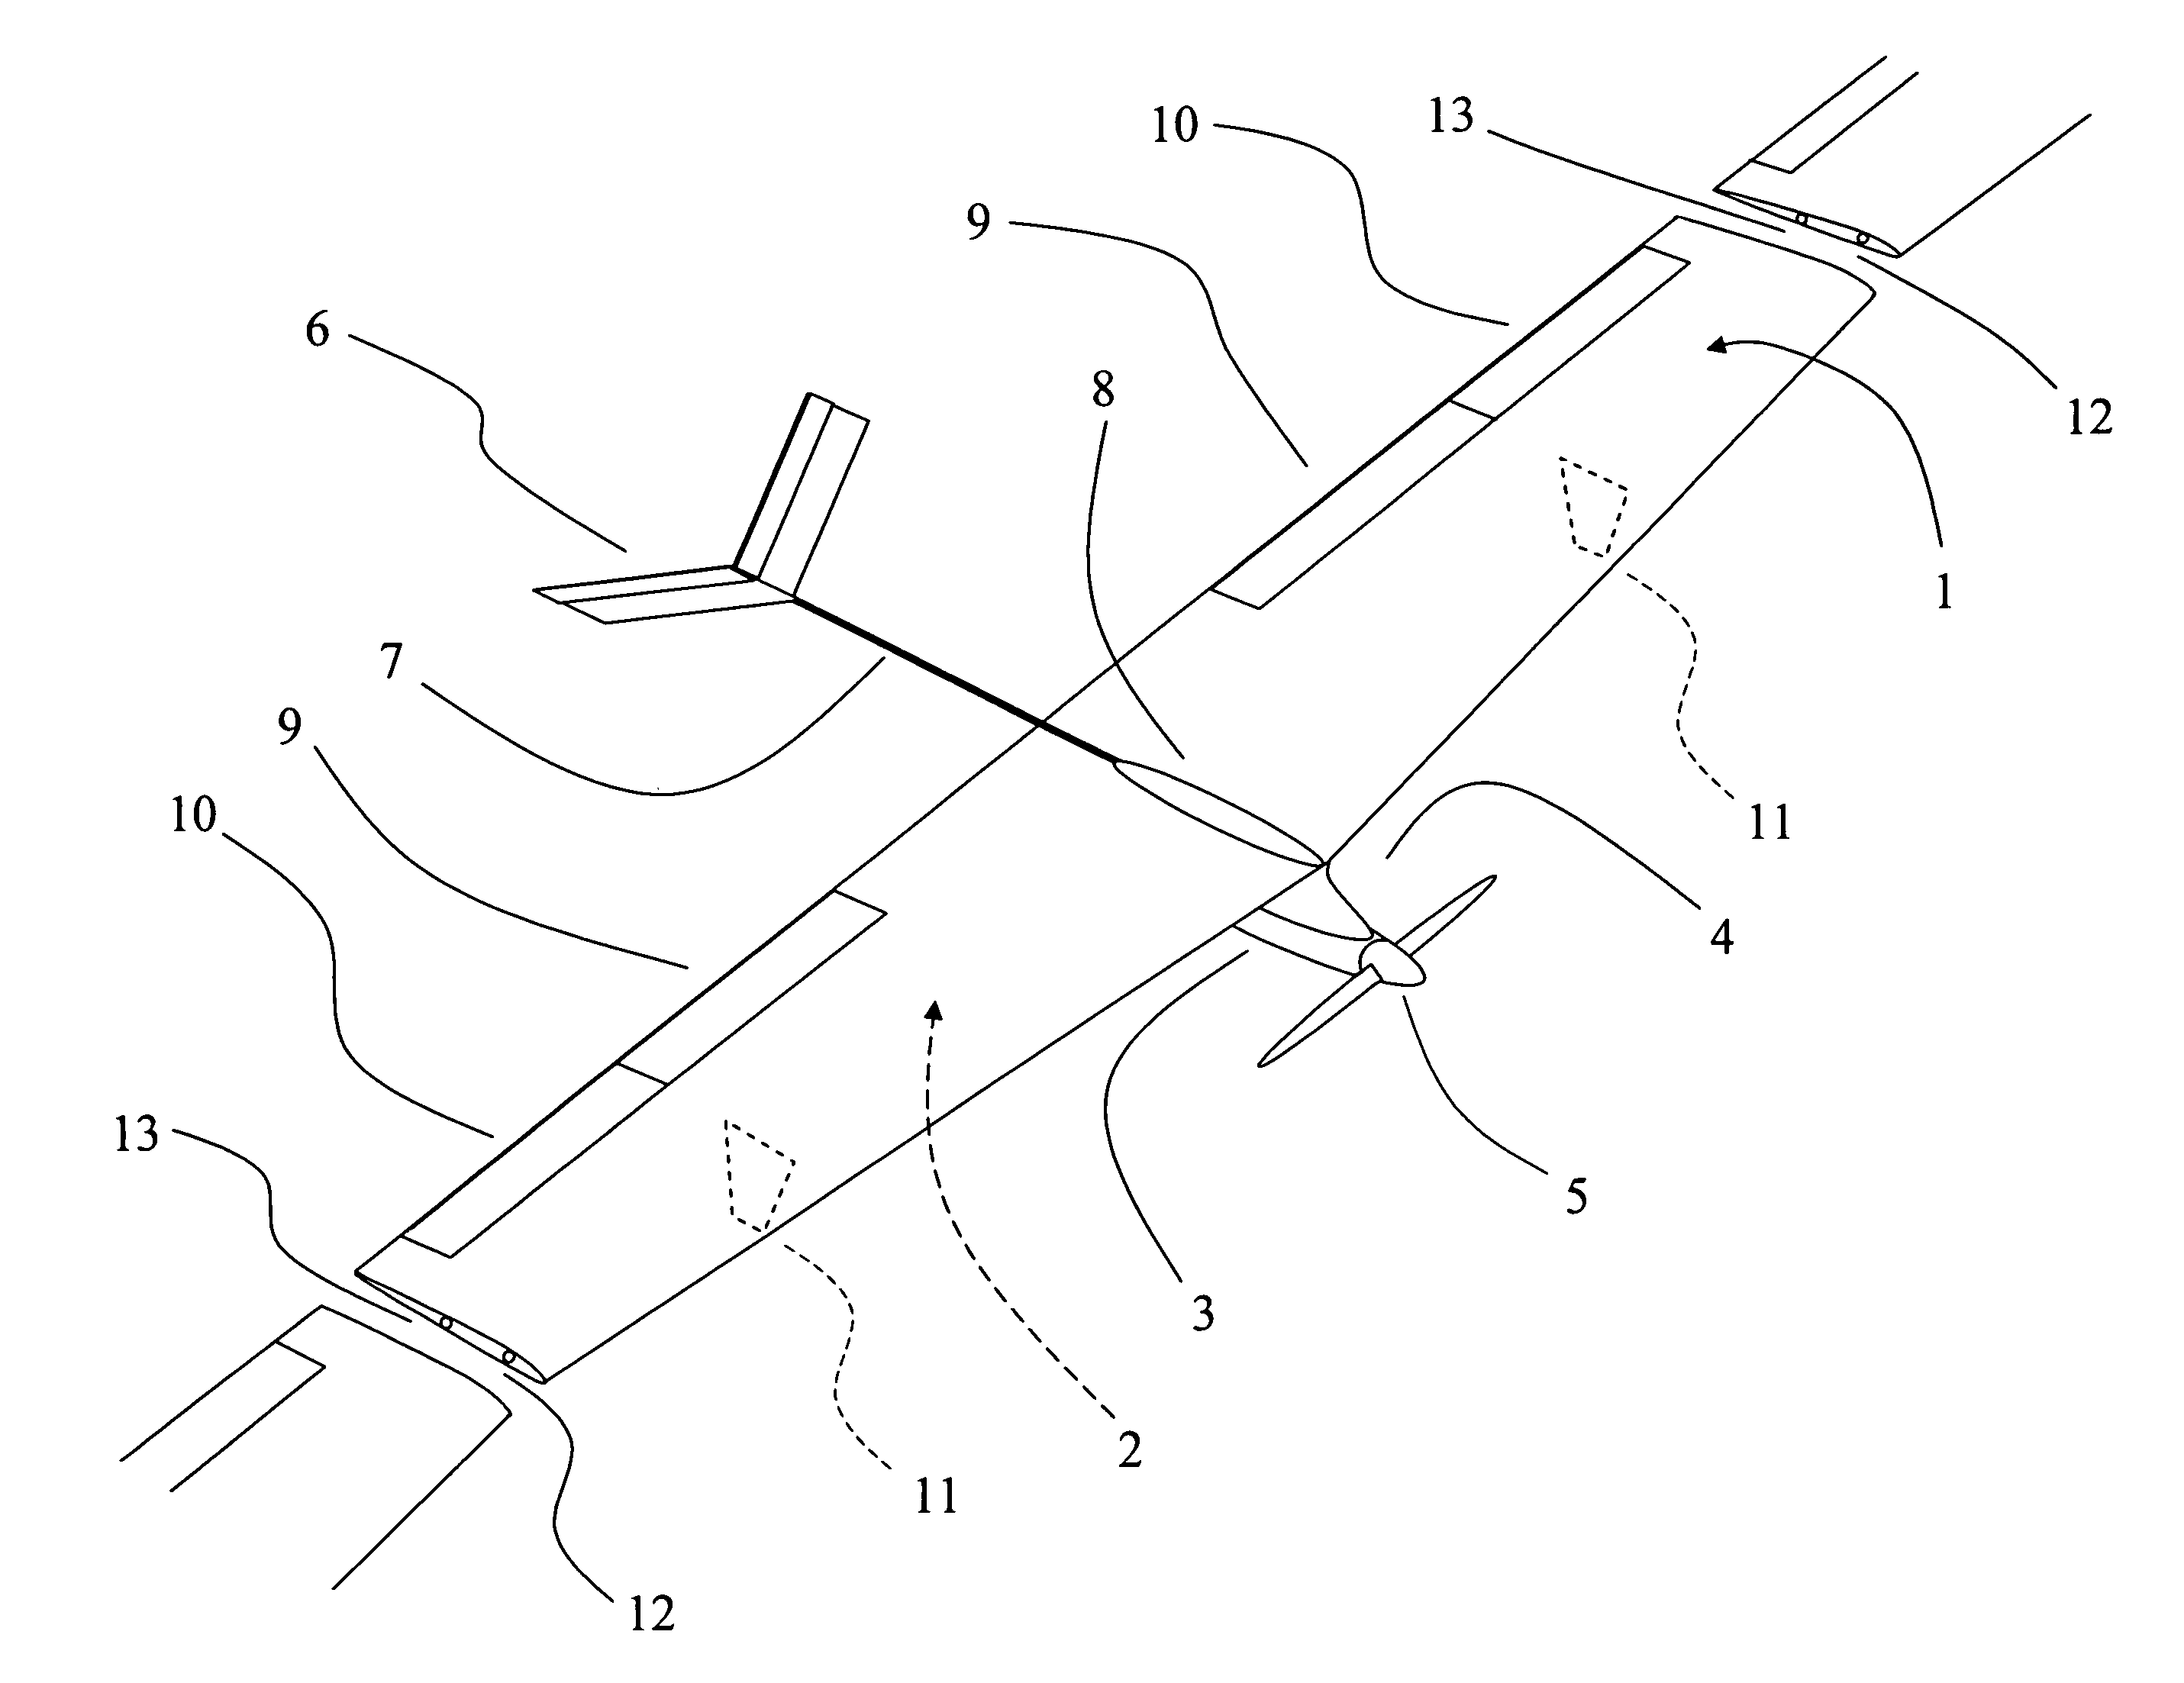 Modular articulated-wing aircraft